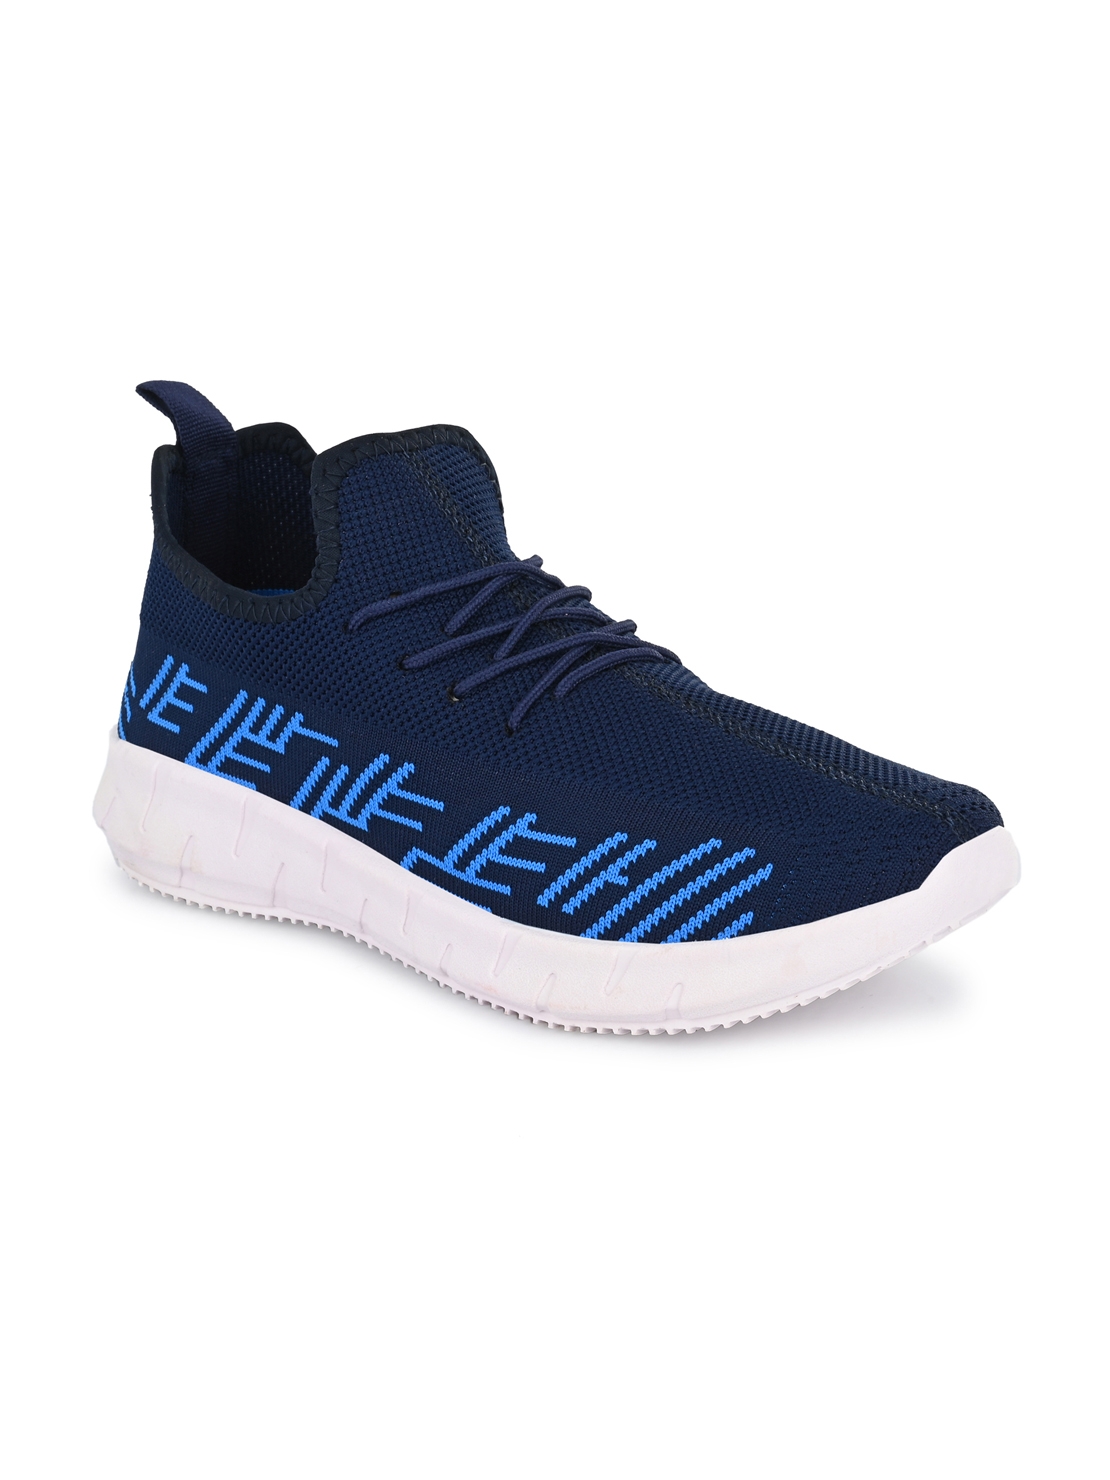 Hirolas | Hirolas® Men's Knitted athleisure Running/Walking/Gym Sports Sneaker Shoes - Blue